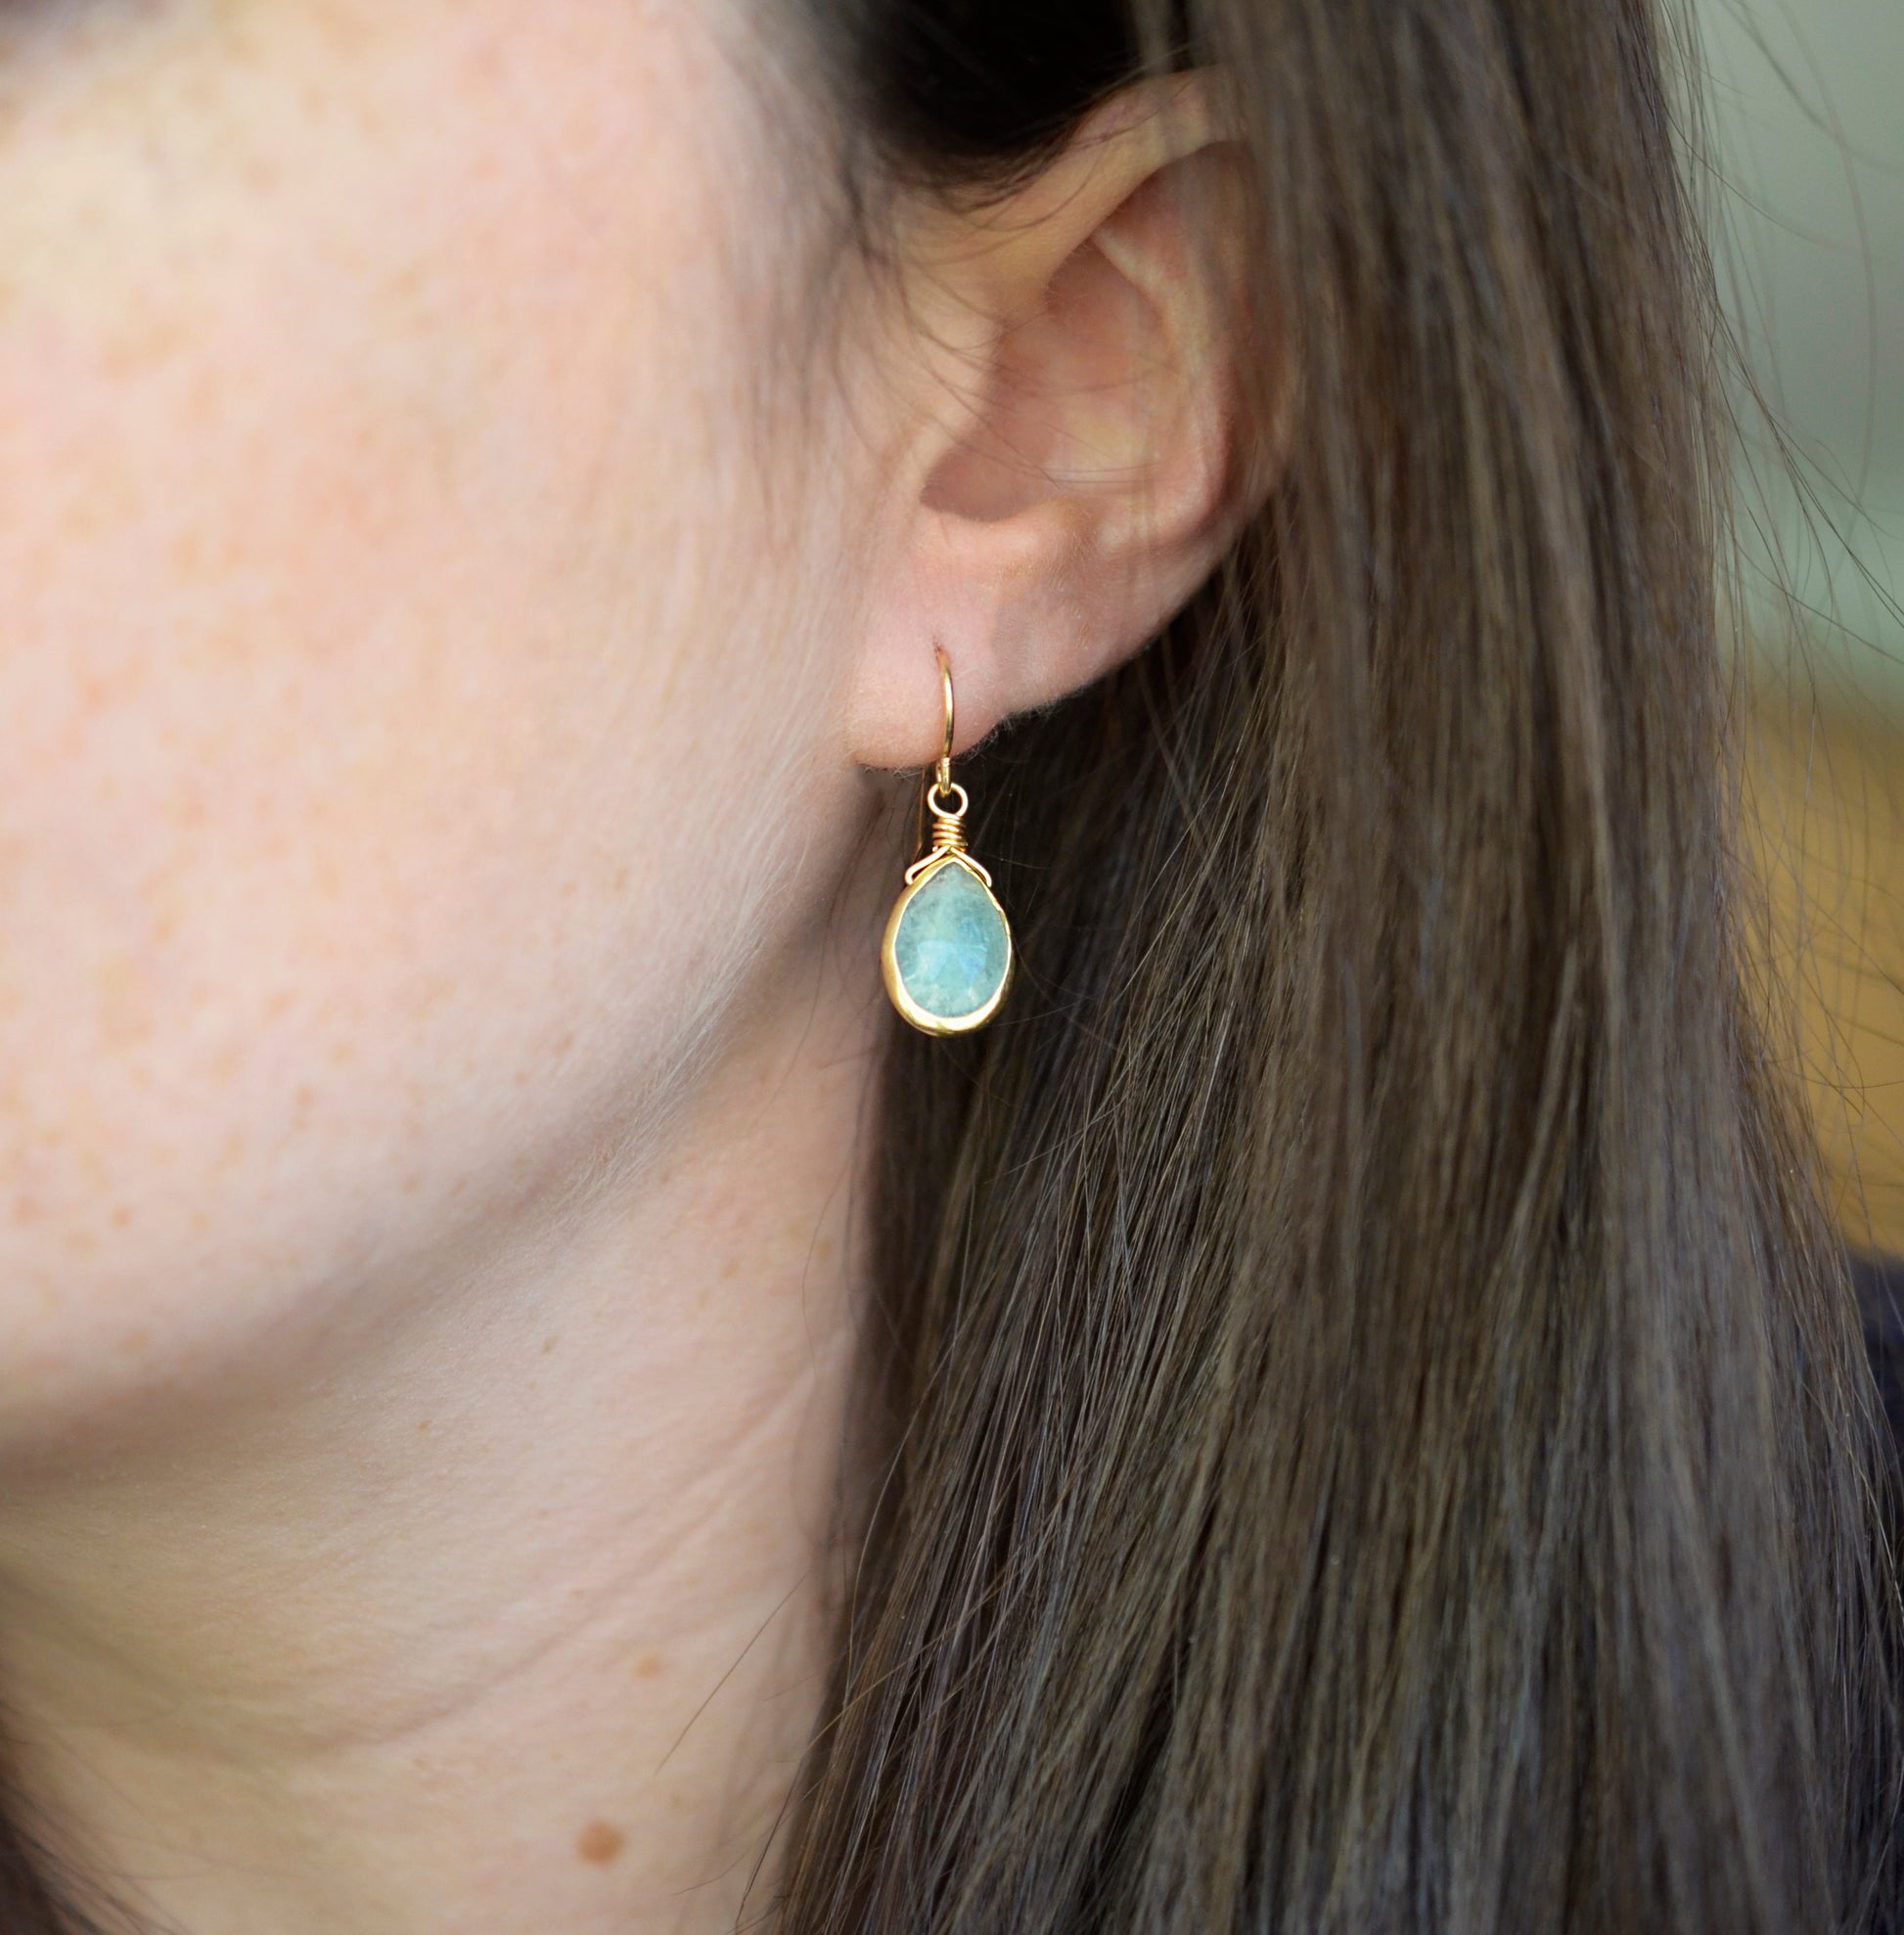 Natural Blue Aquamarine Earrings, 14k Gold Filled, Sterling Silver. Faceted teardrop dangles. Modeled image.